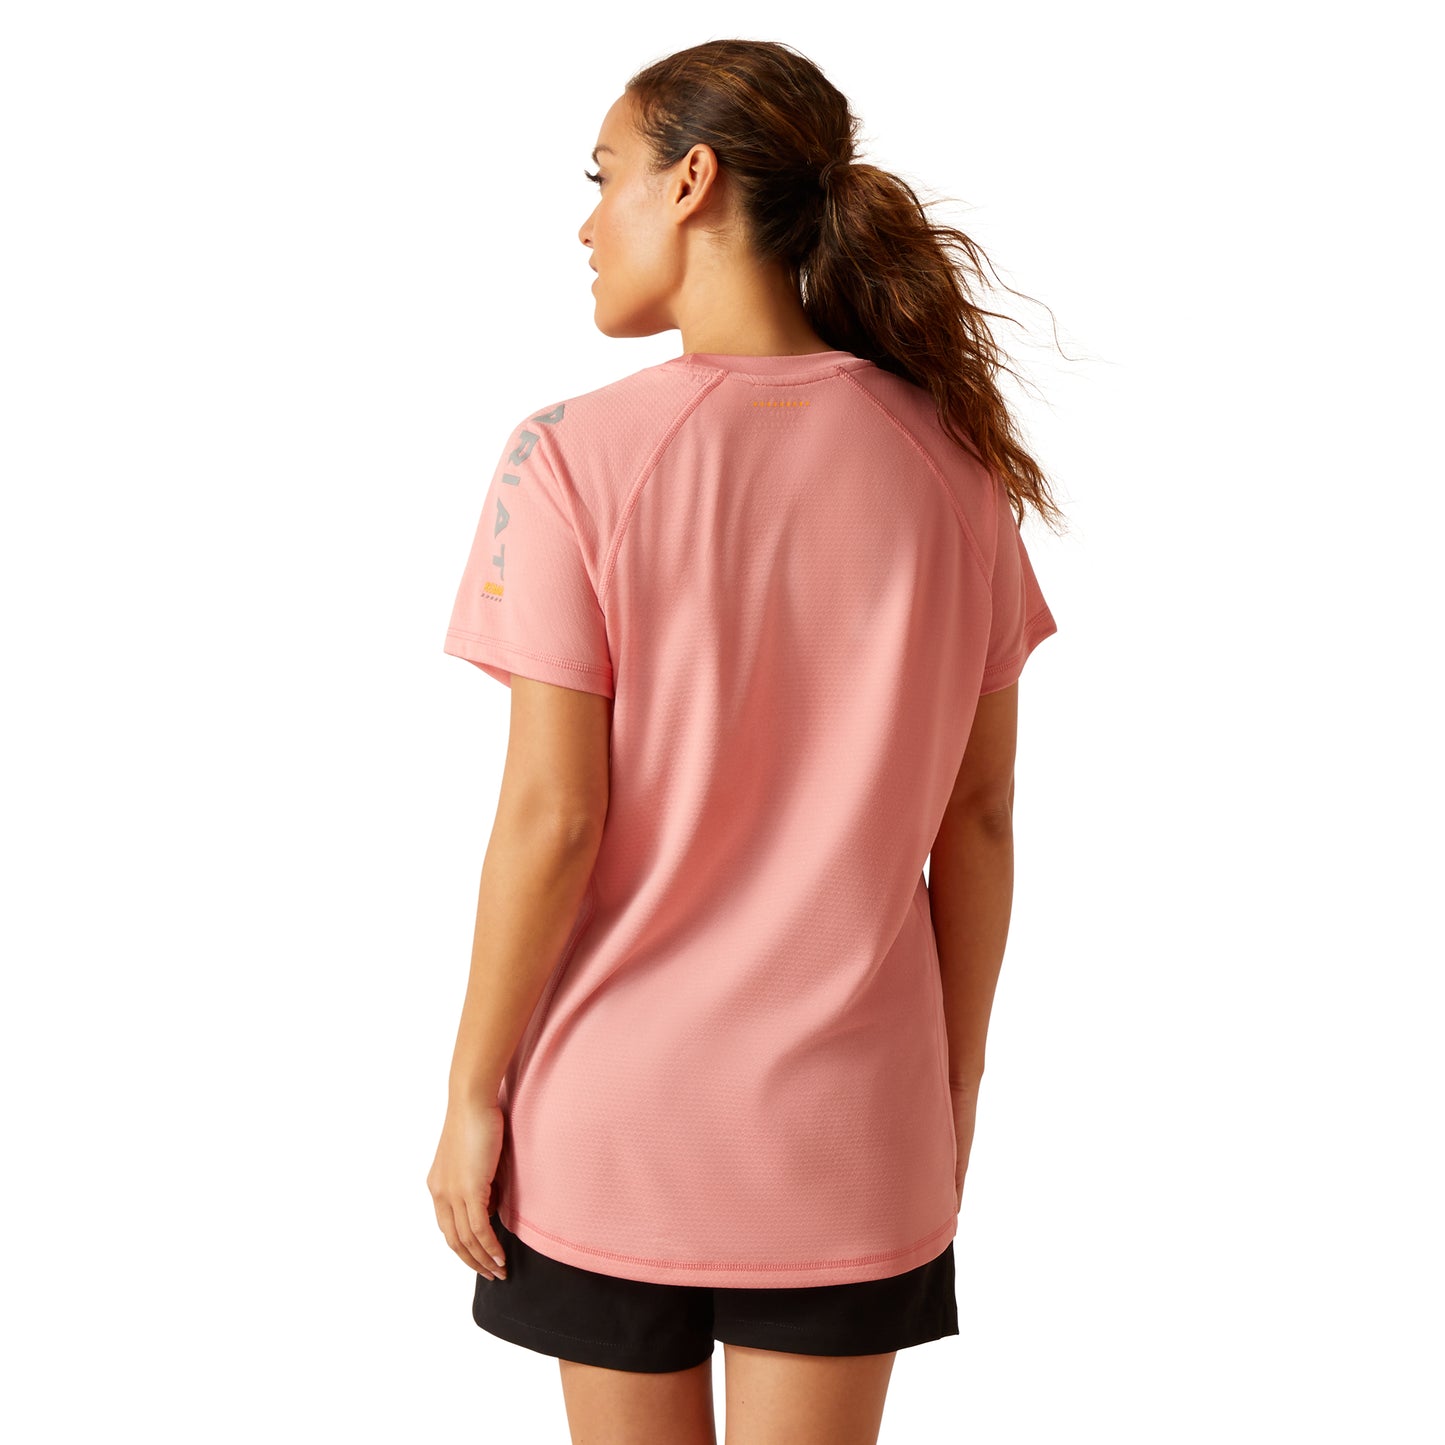 Ariat Ladies Rebar Heat Fighter Mauveglow T-Shirt 10049057